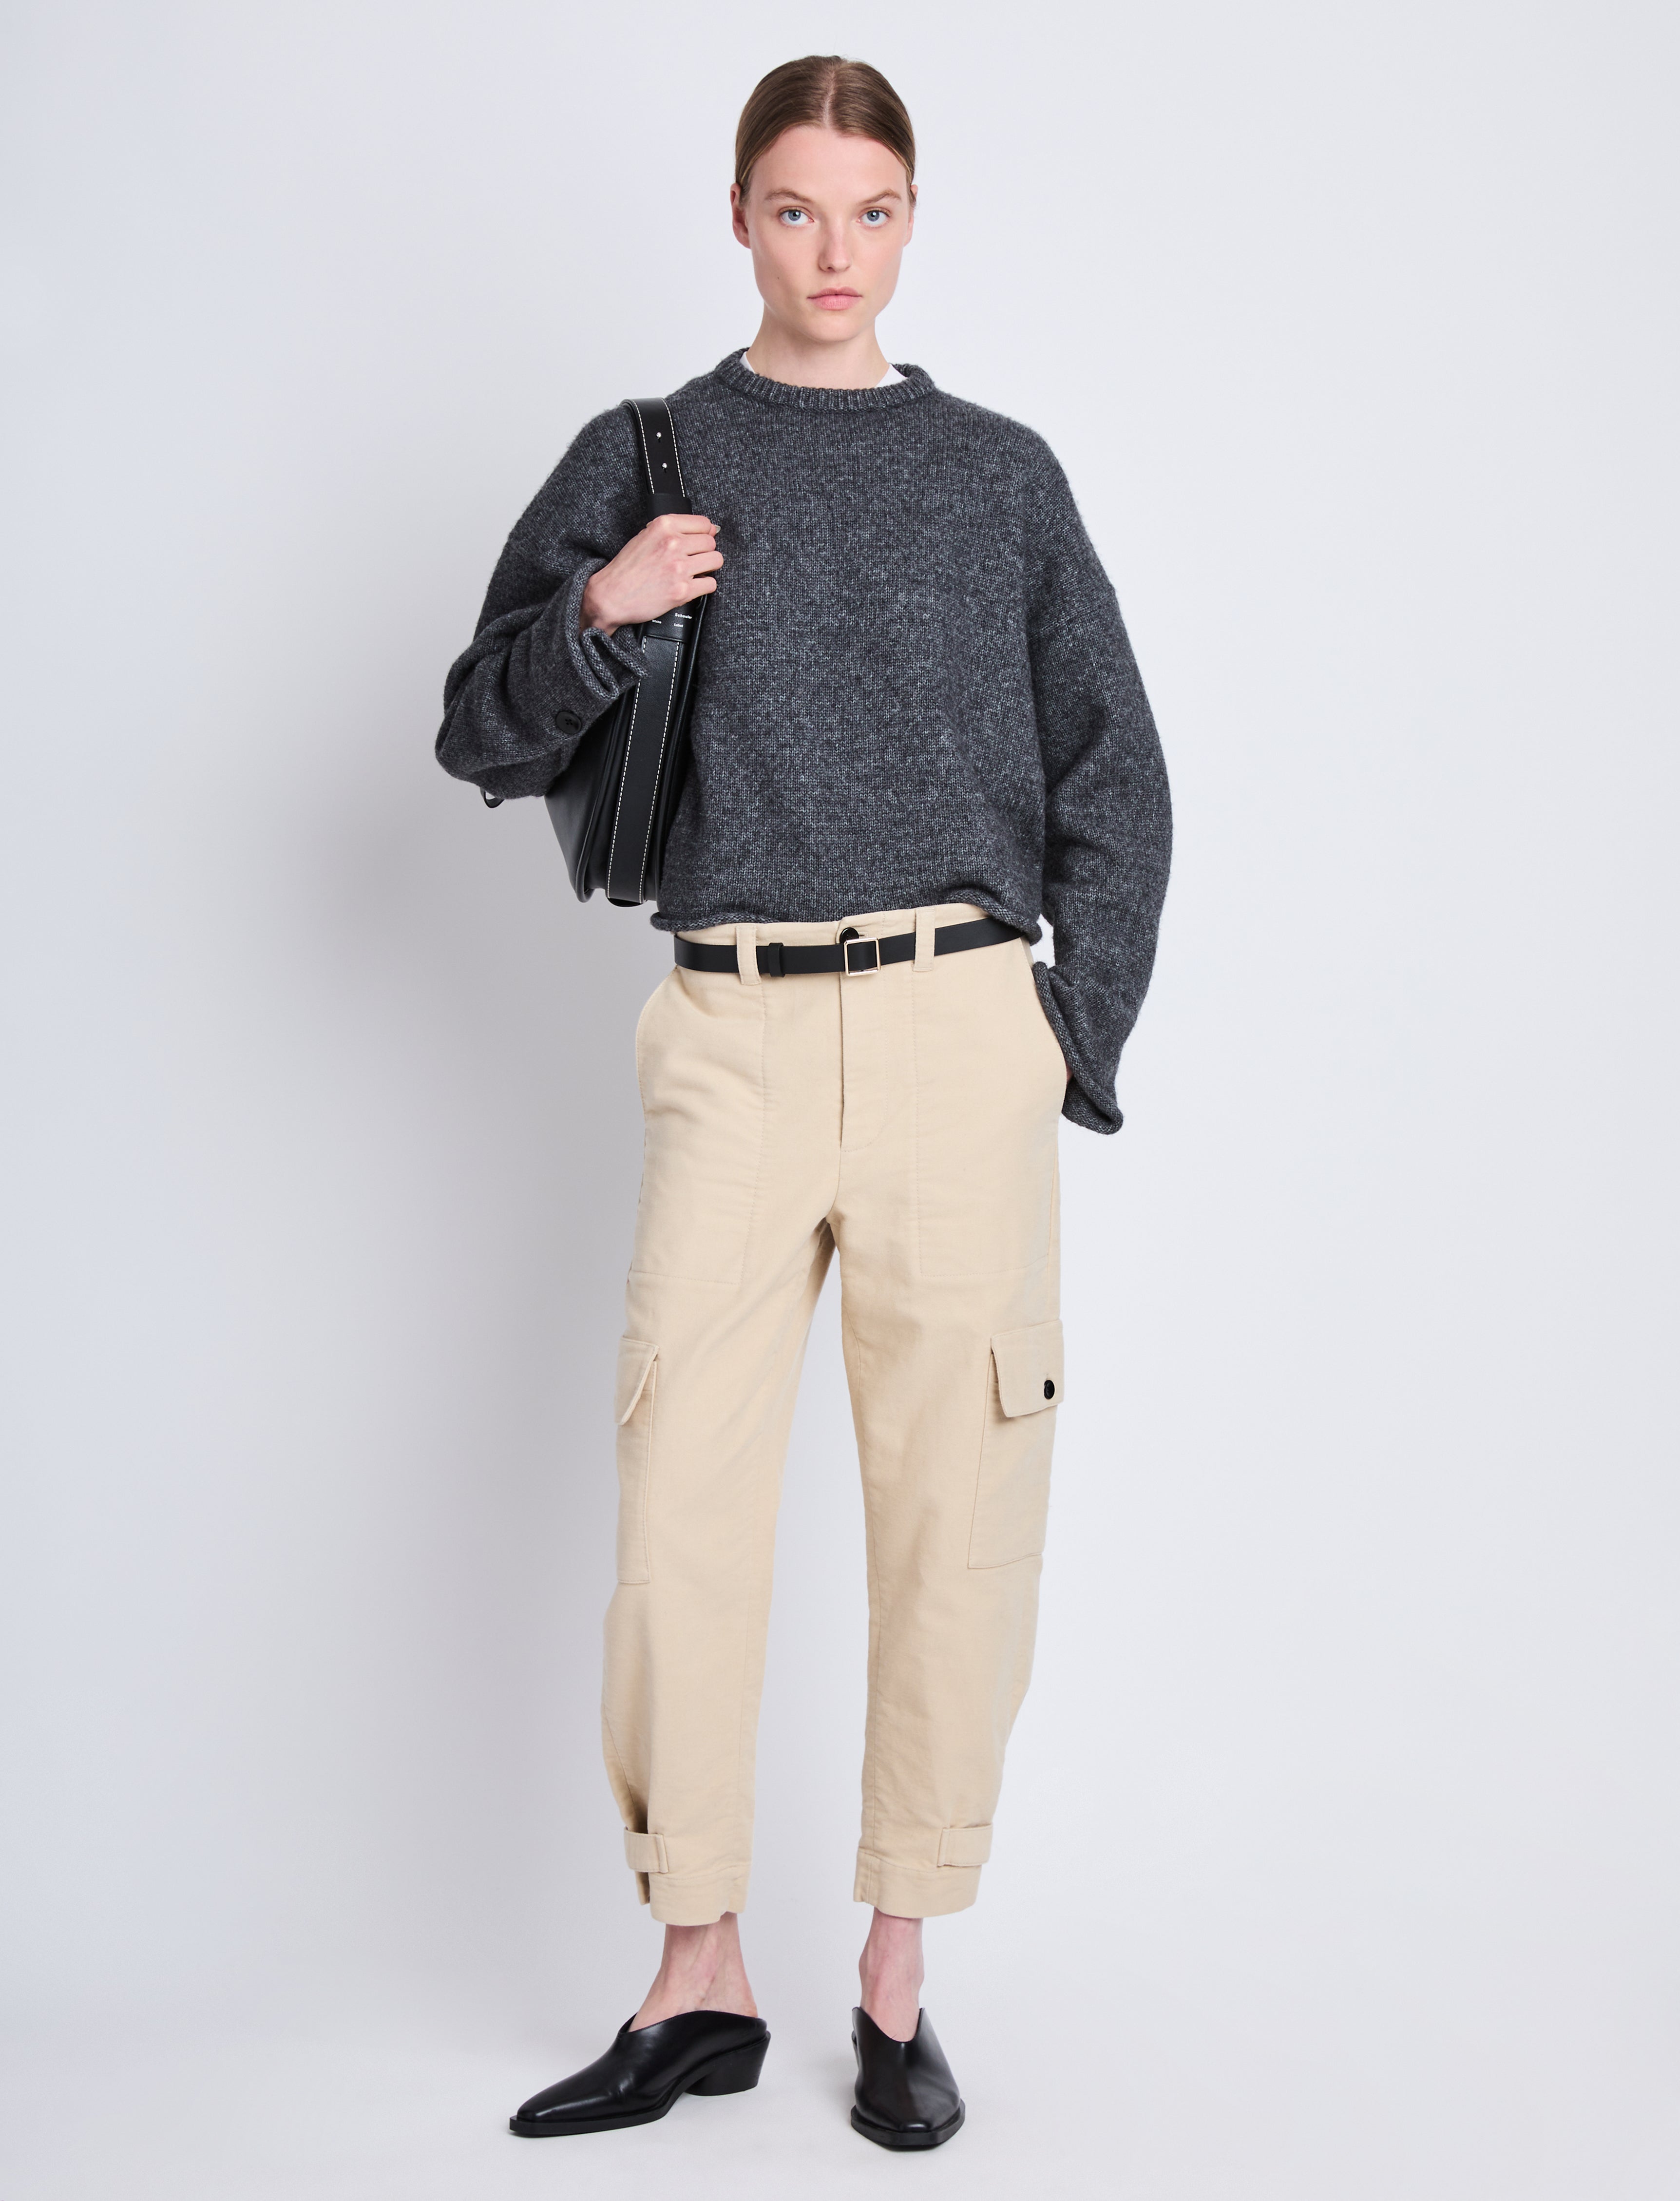 Tara Knit Sweater in Wool Blend – Proenza Schouler